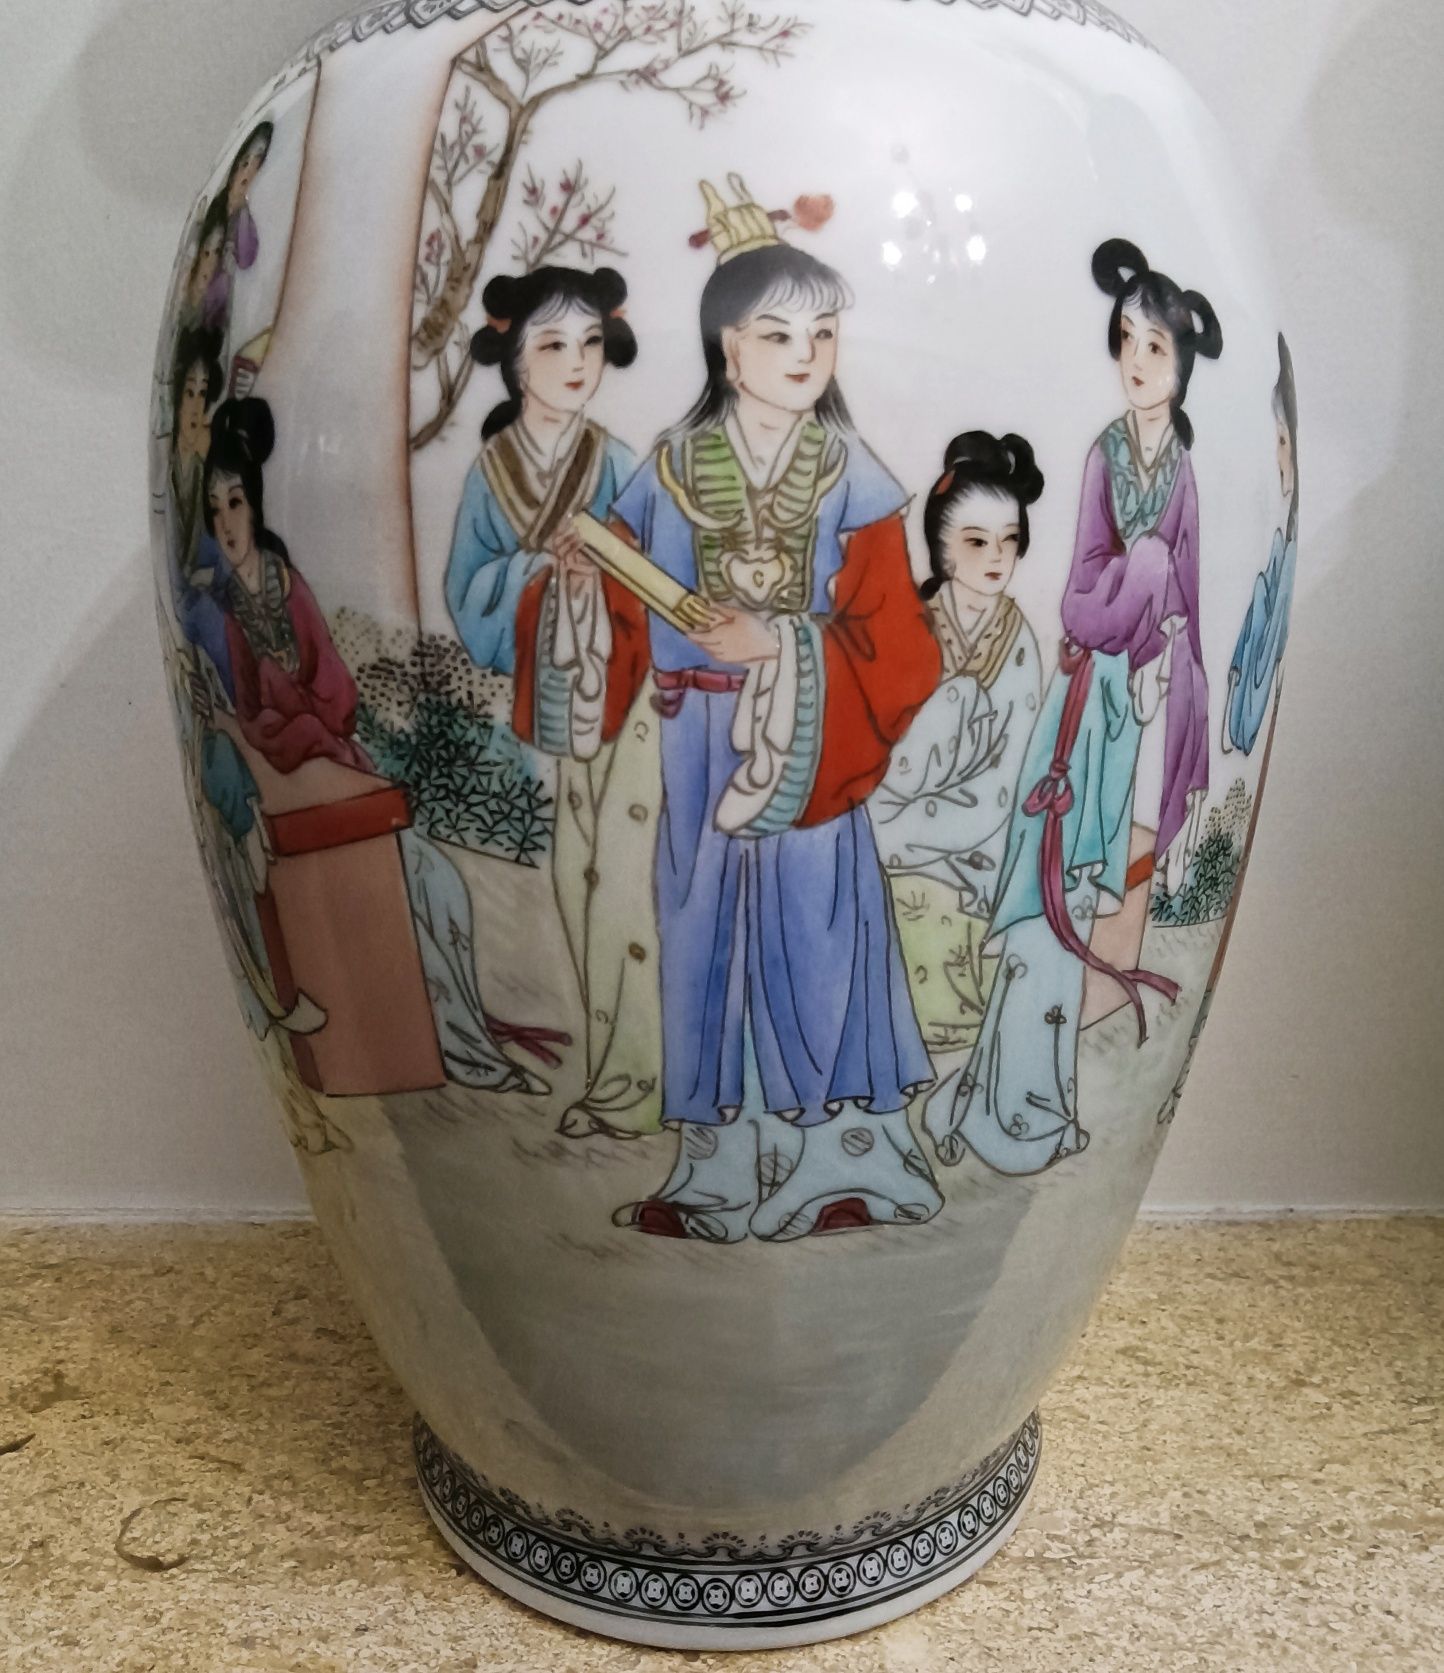 Par de vaso/ jarra em porcelana chinesa. China